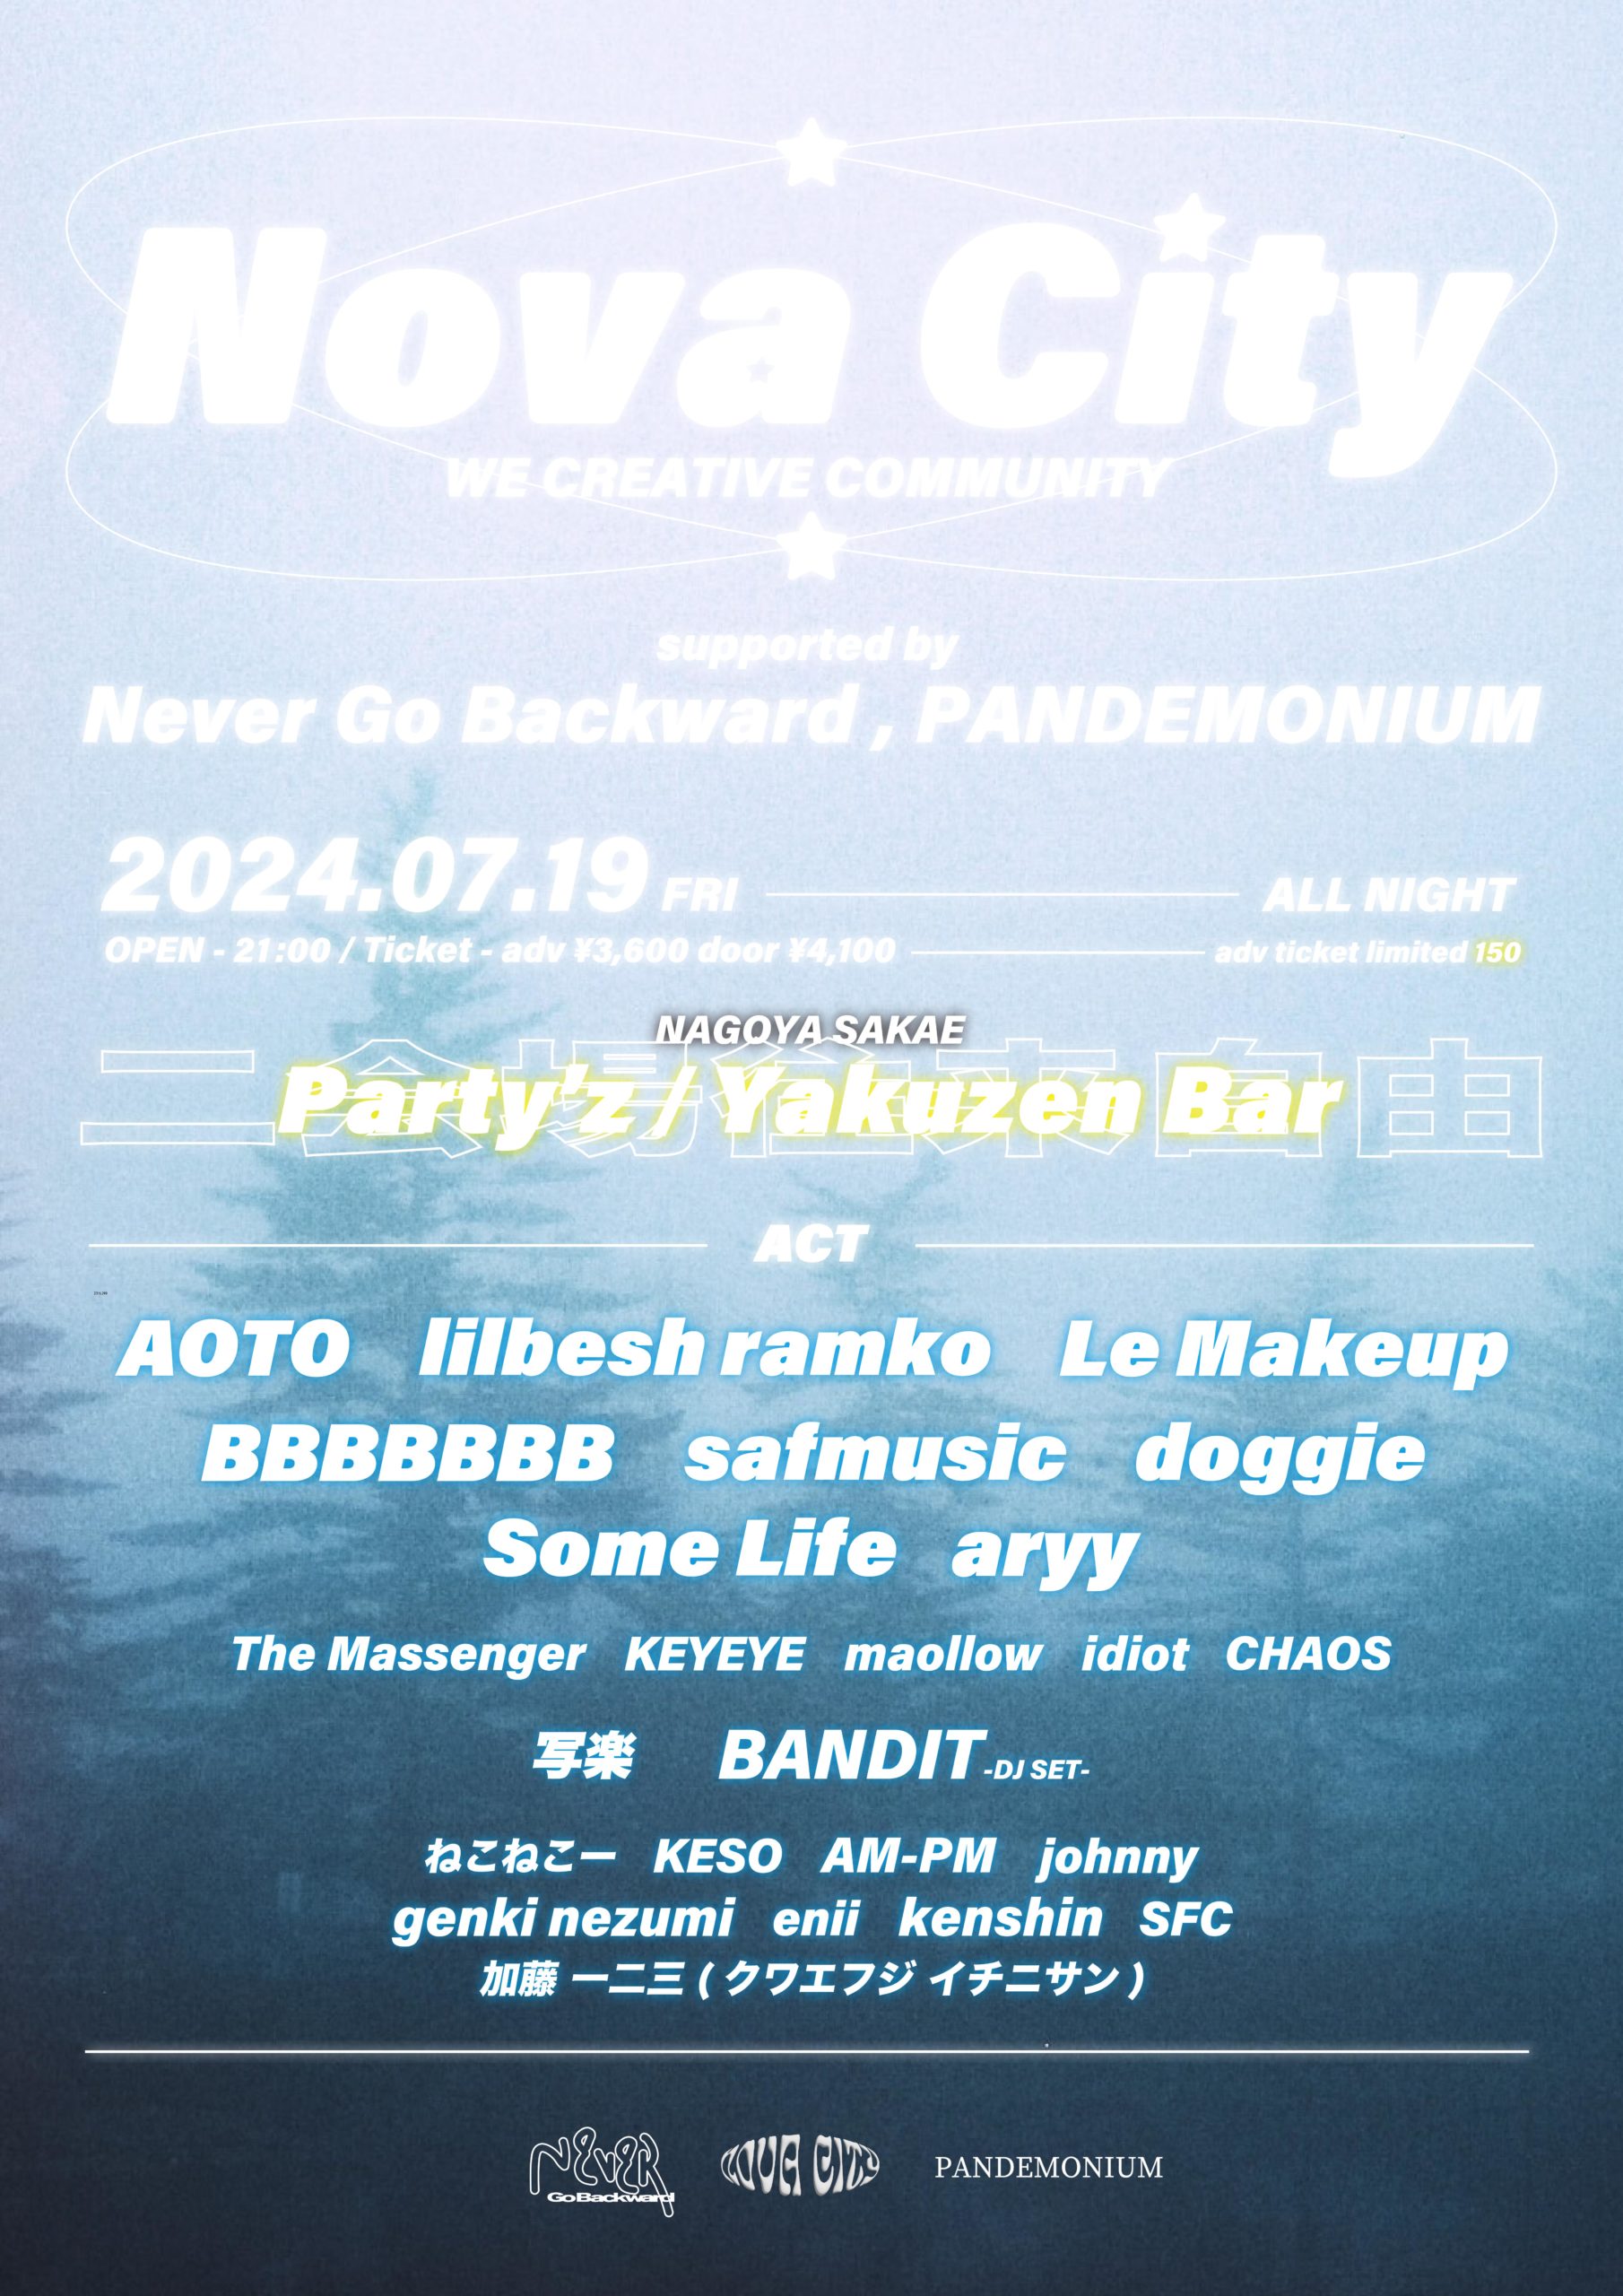 Nova City (ヨミ:ノヴァシティー) Supported by Never Go Backward,PANDEMONIUM